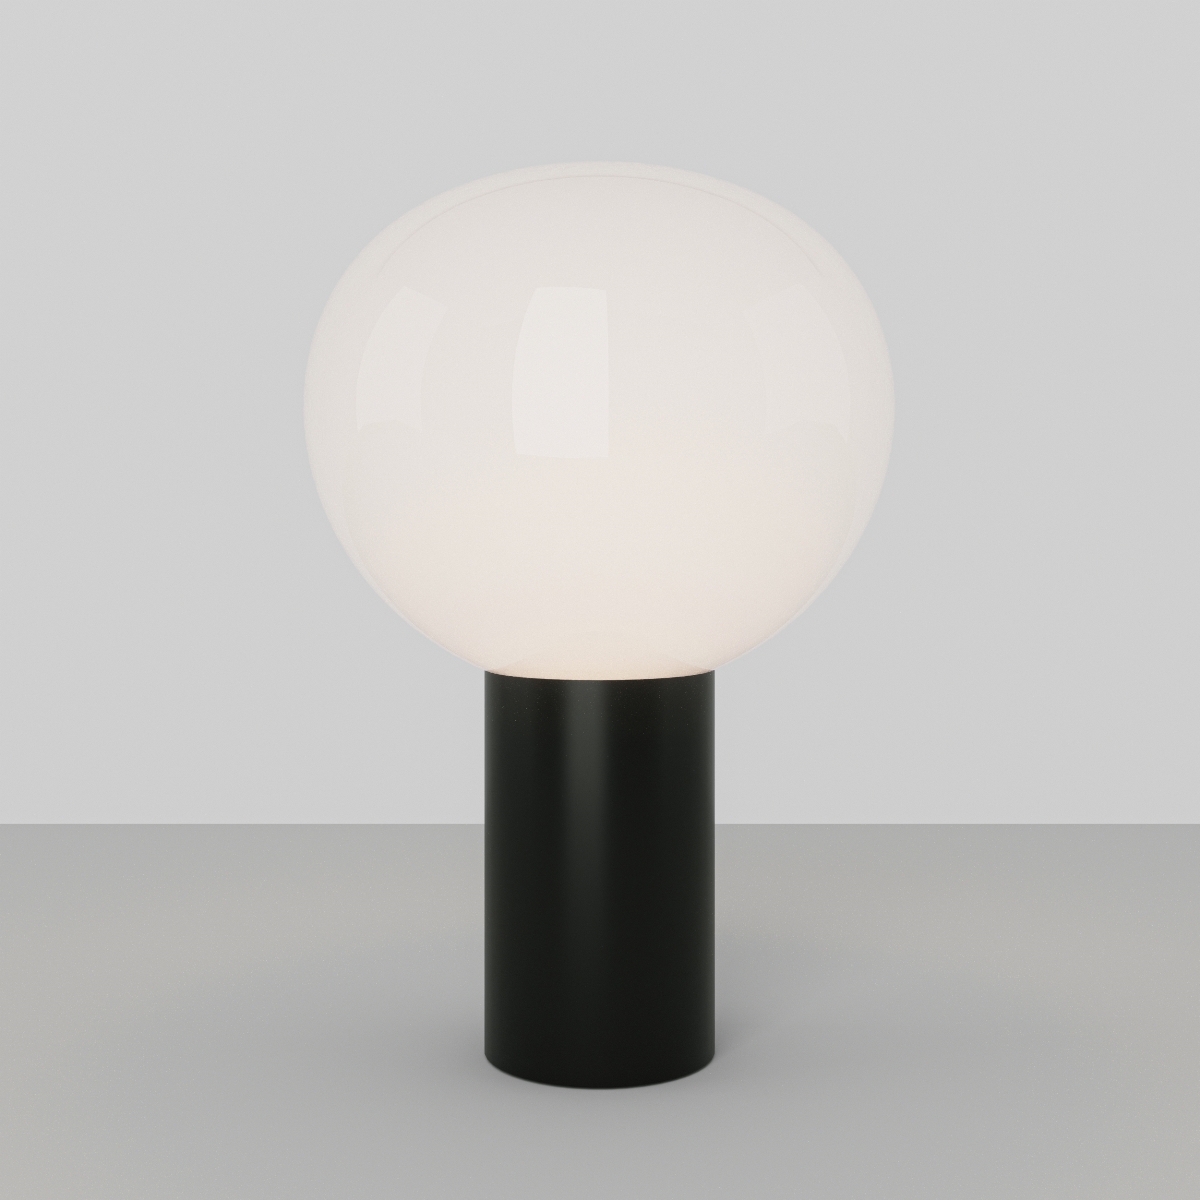 Gopl Table lamp.丨NEENDESIGN 尼恩设计